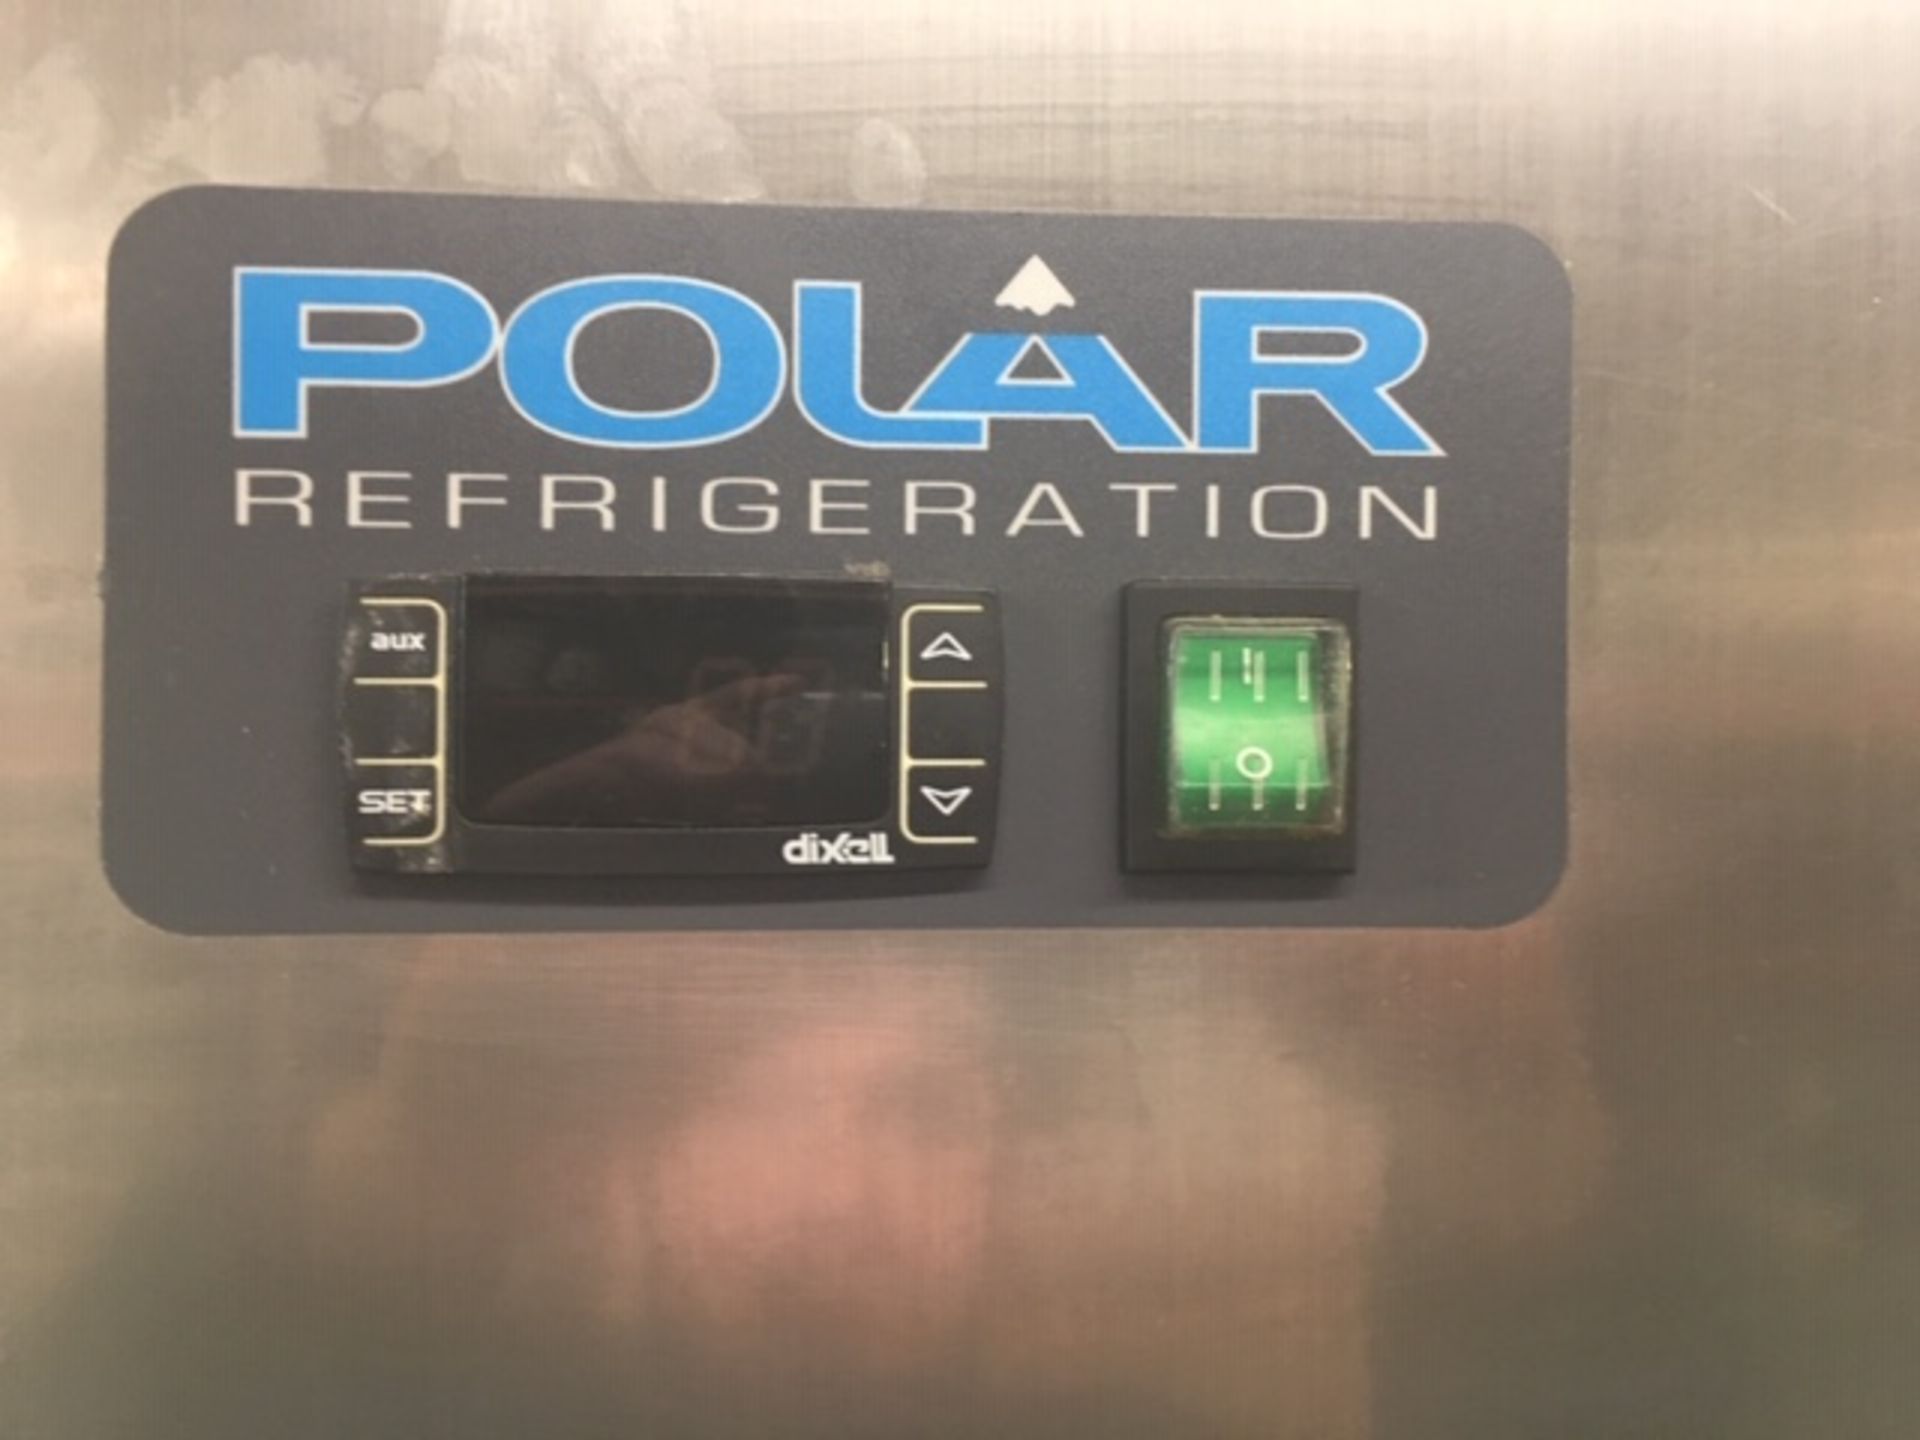 Polar Refrigeration U632 Upright Refrigerator - Image 2 of 4